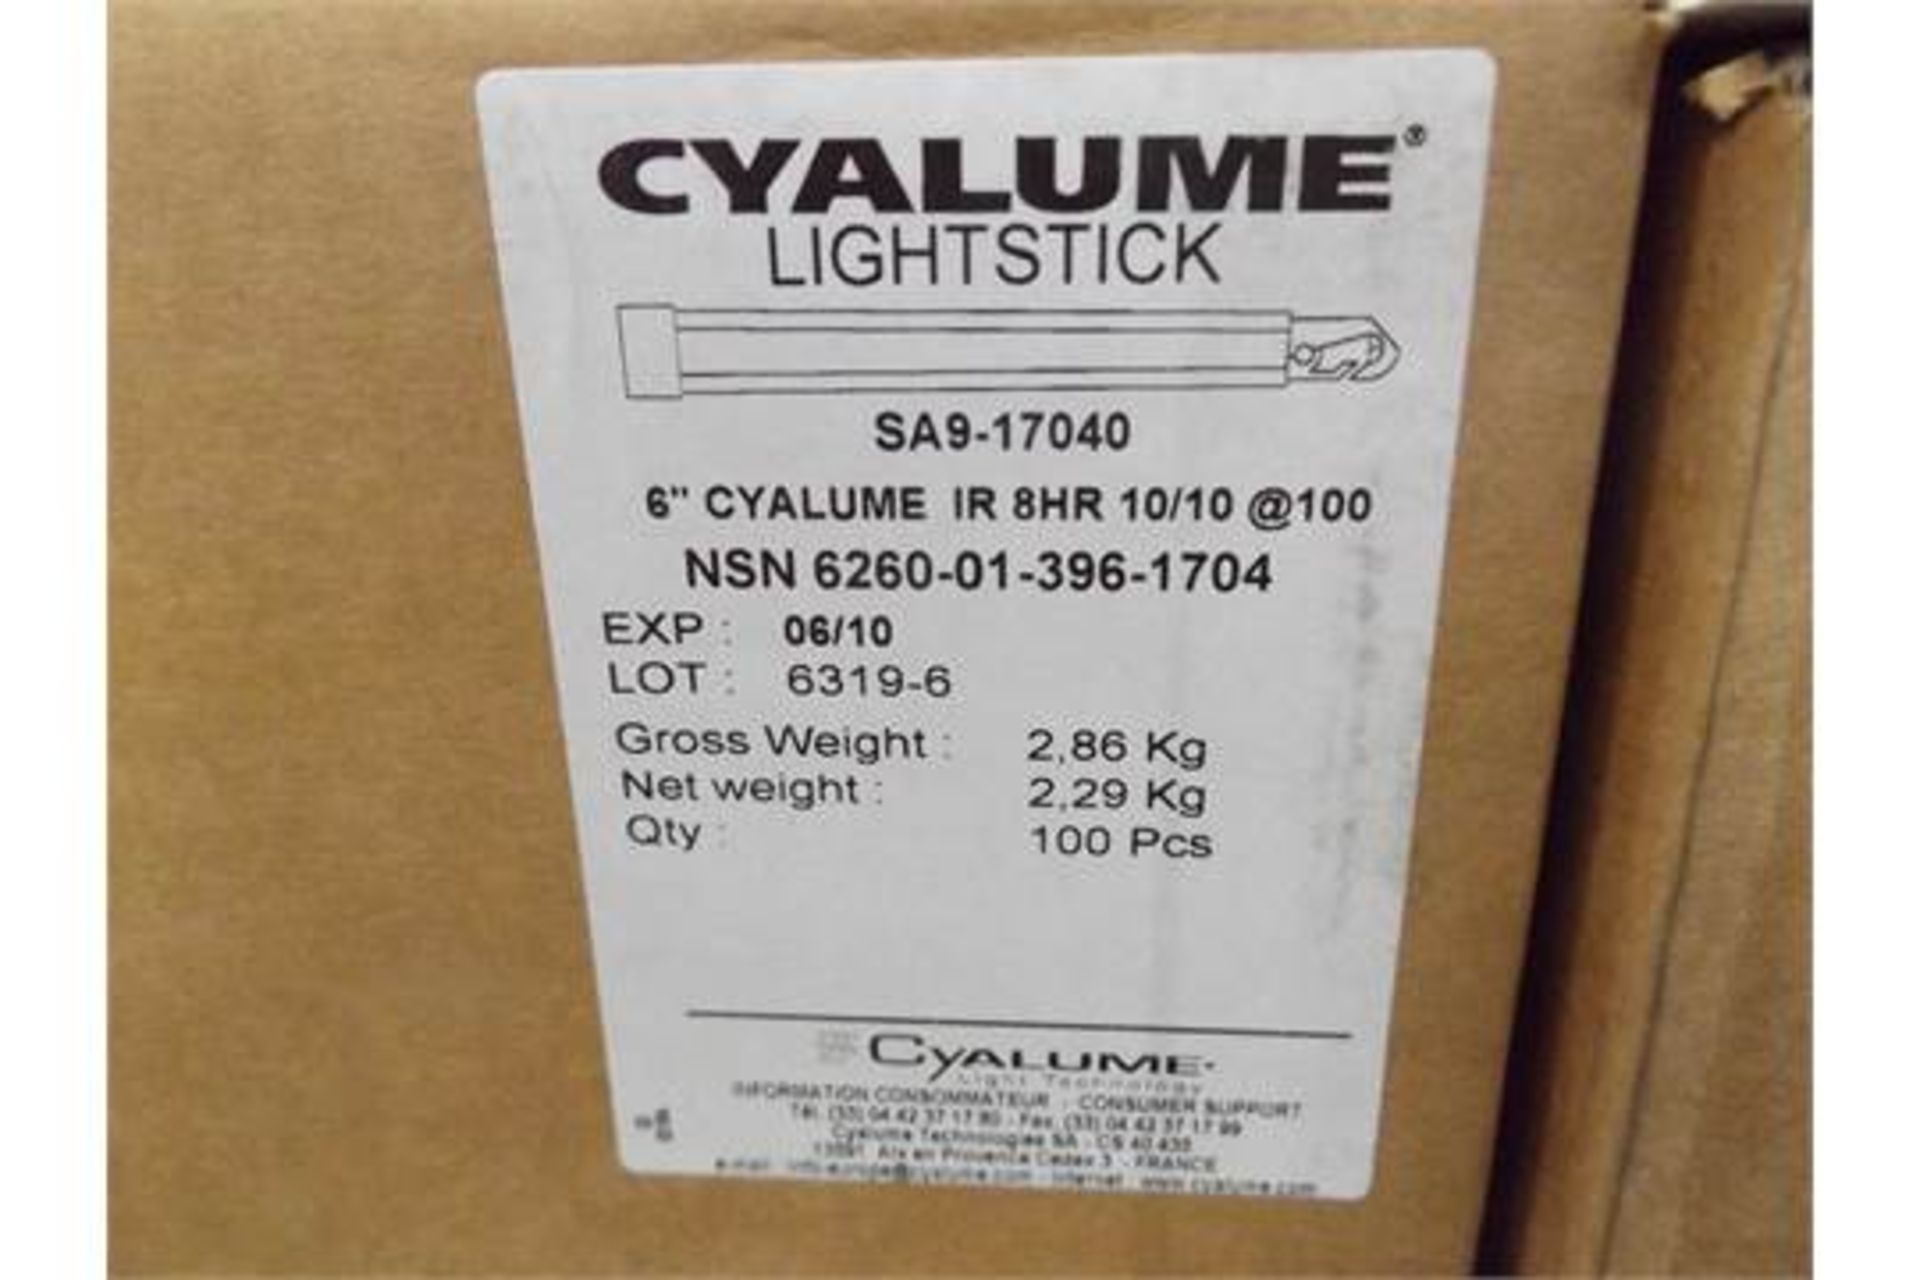 600 x Cyalume 6" IR Lightsticks - Image 4 of 4